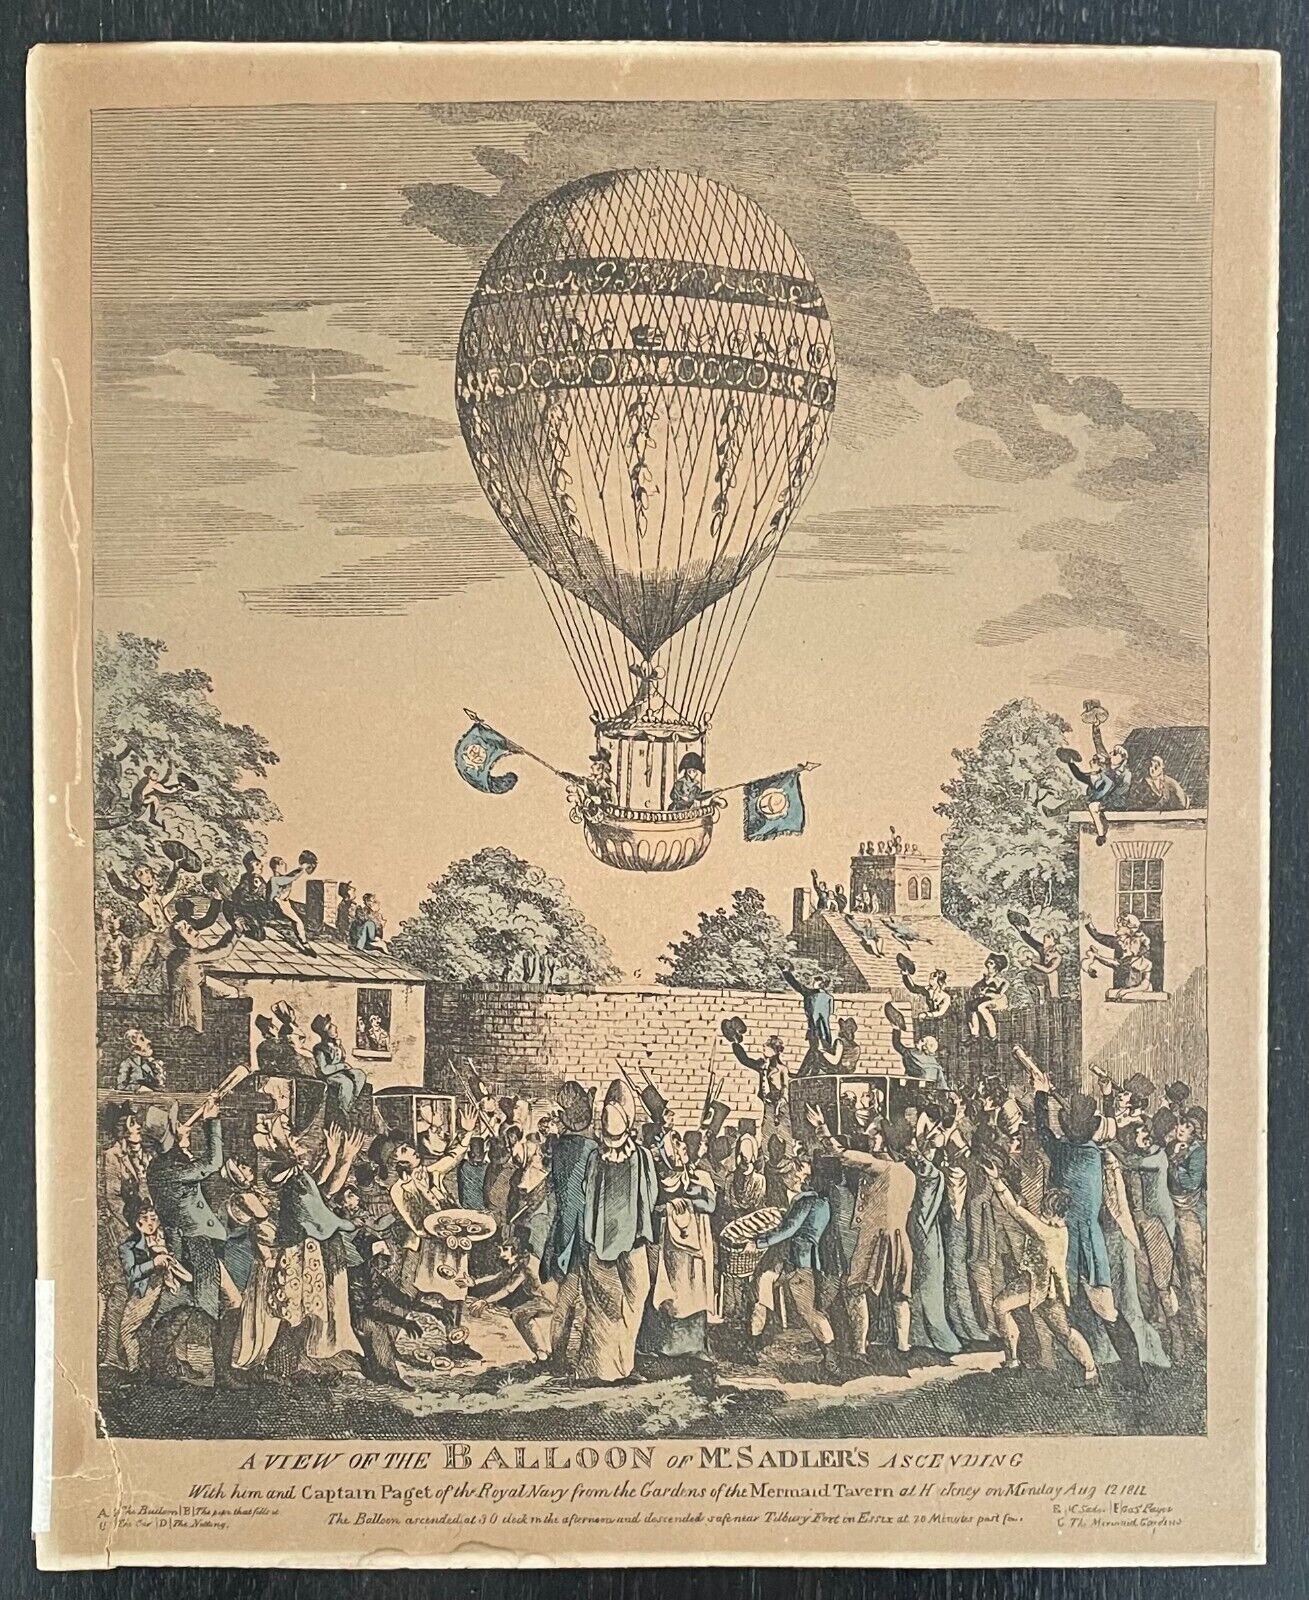 VIEW OF THE HOT AIR BALLOON OF MR. SADLER'S ASCENDING - RARE 1811 ORIGINAL PRINT